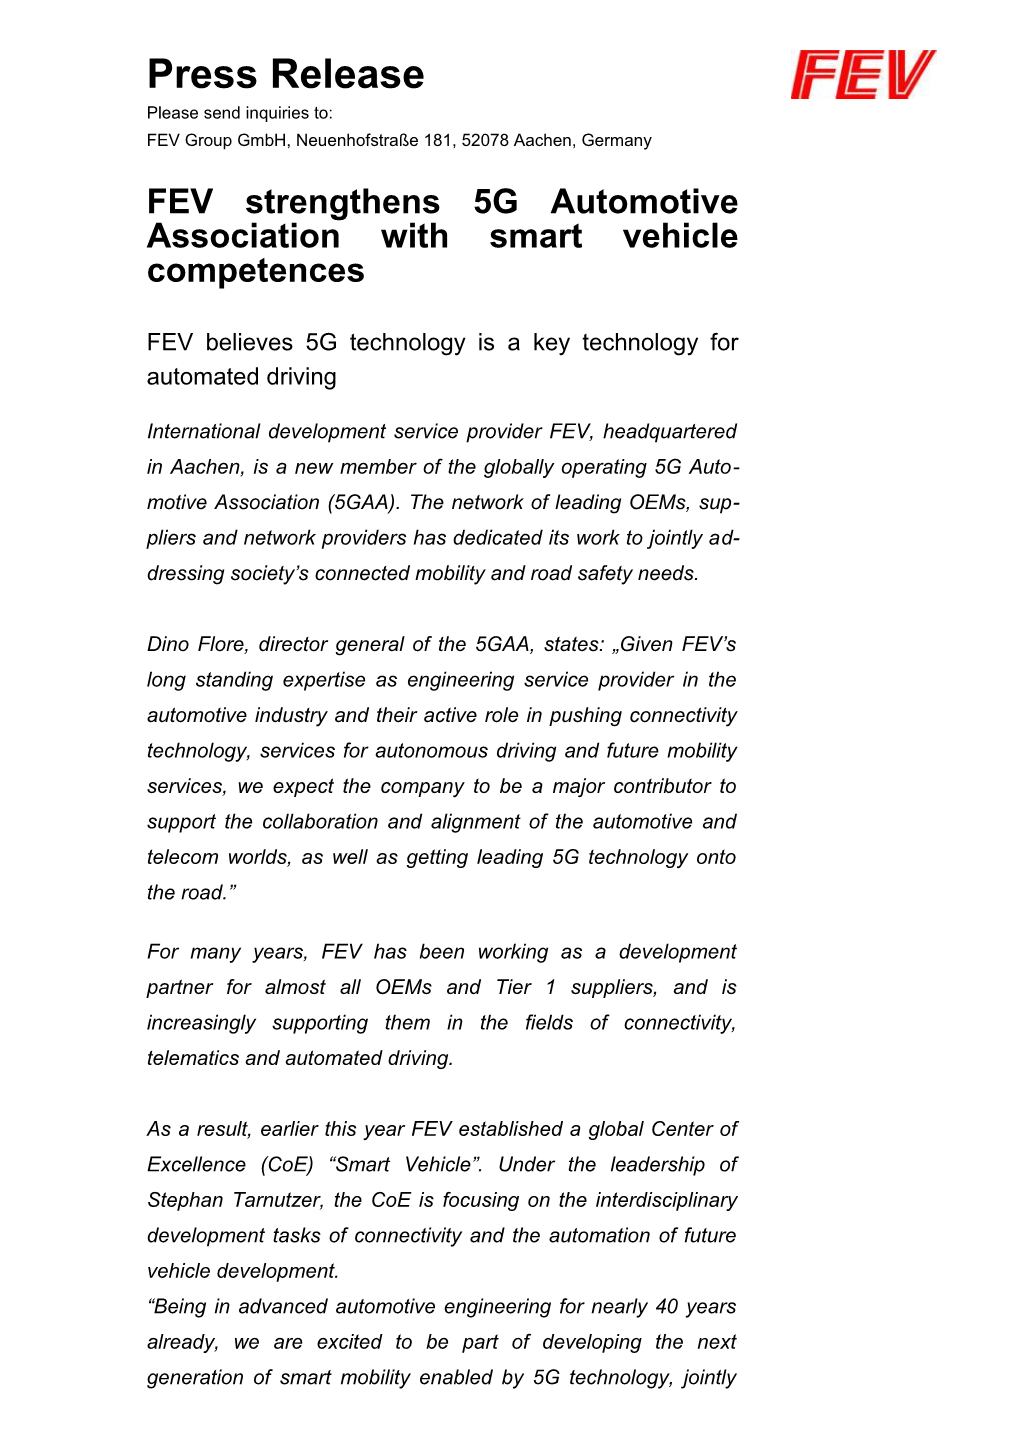 FEV Strengthens 5G Automotive Association with Smart Vehicle Competences